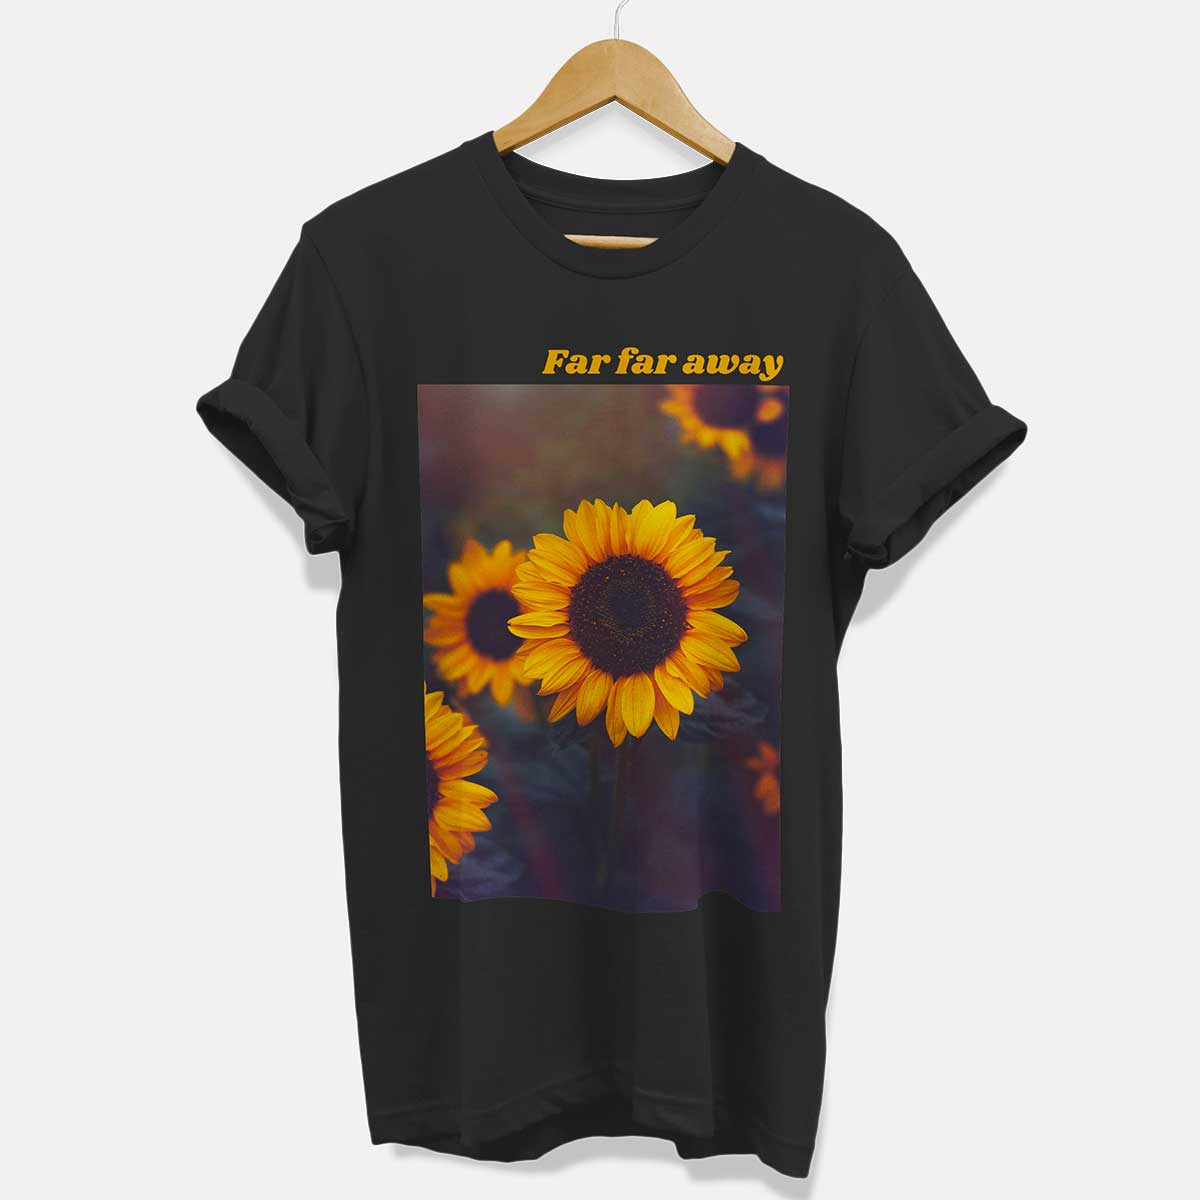 Paint w/Fashion T-shirt – B. Fly Apparel